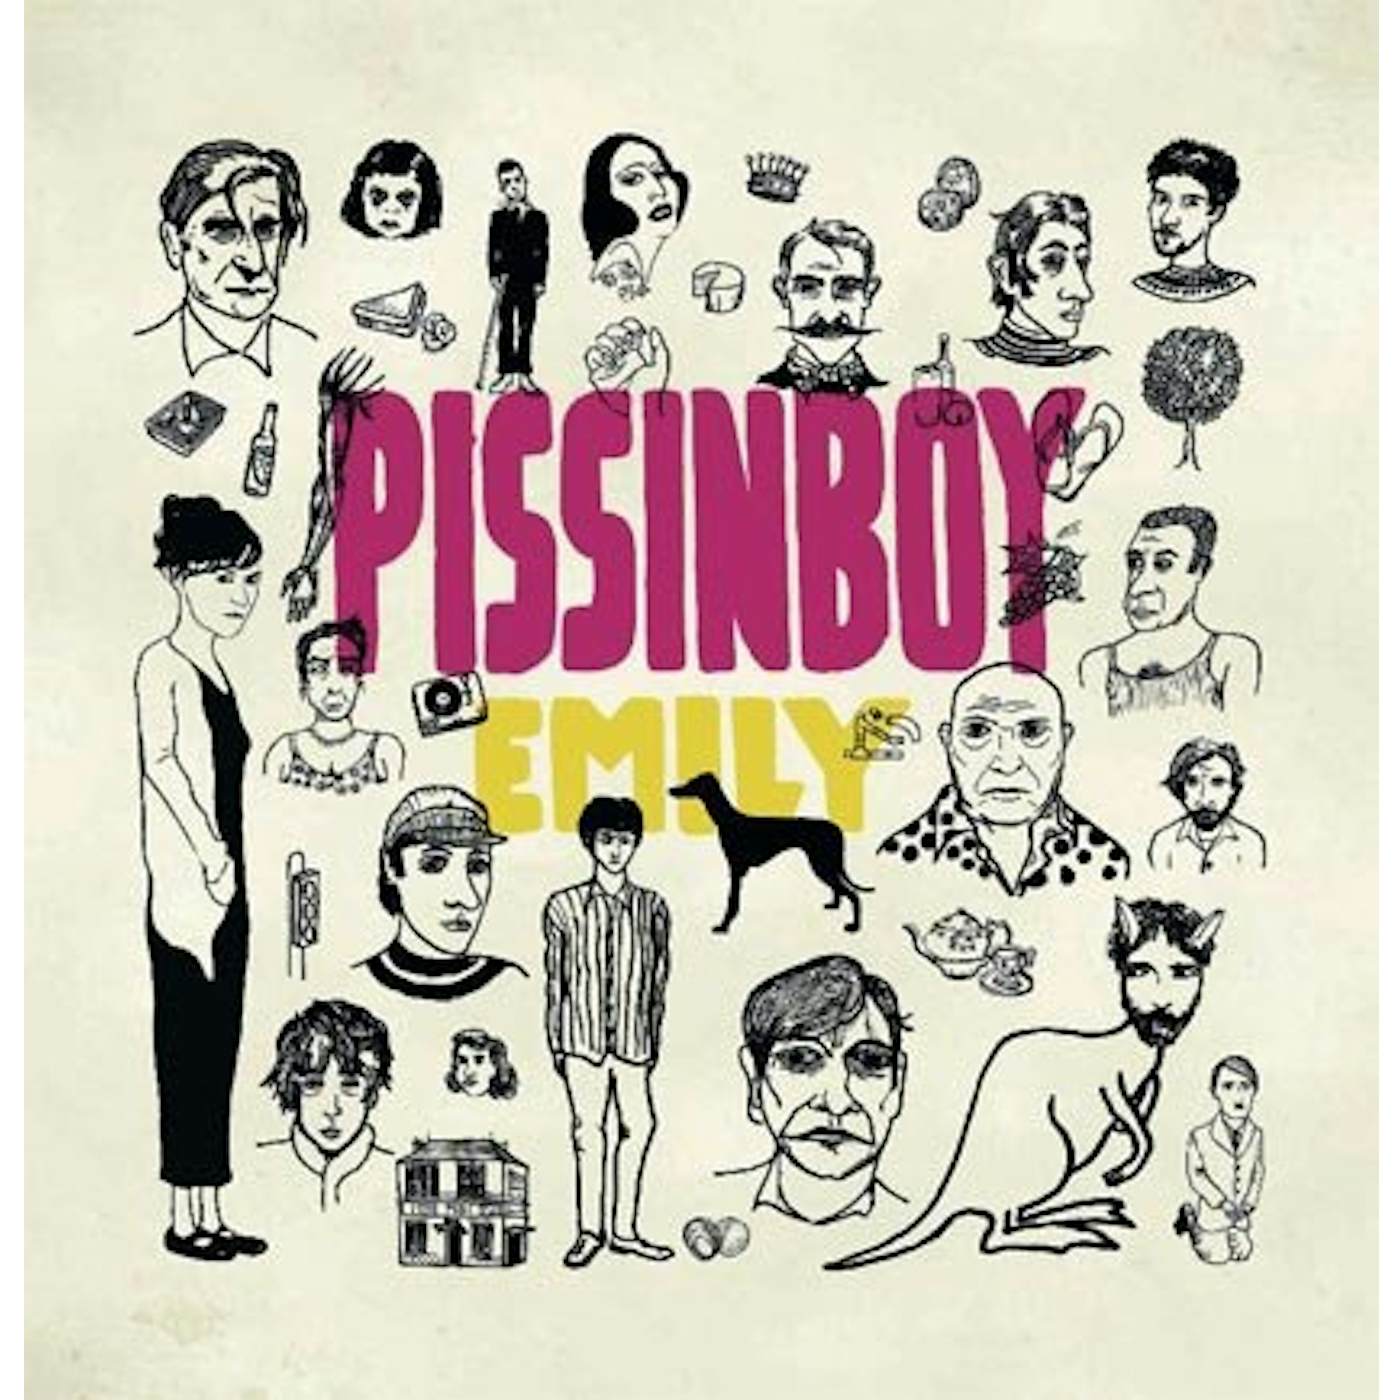 Pissinboy Emily Vinyl Record